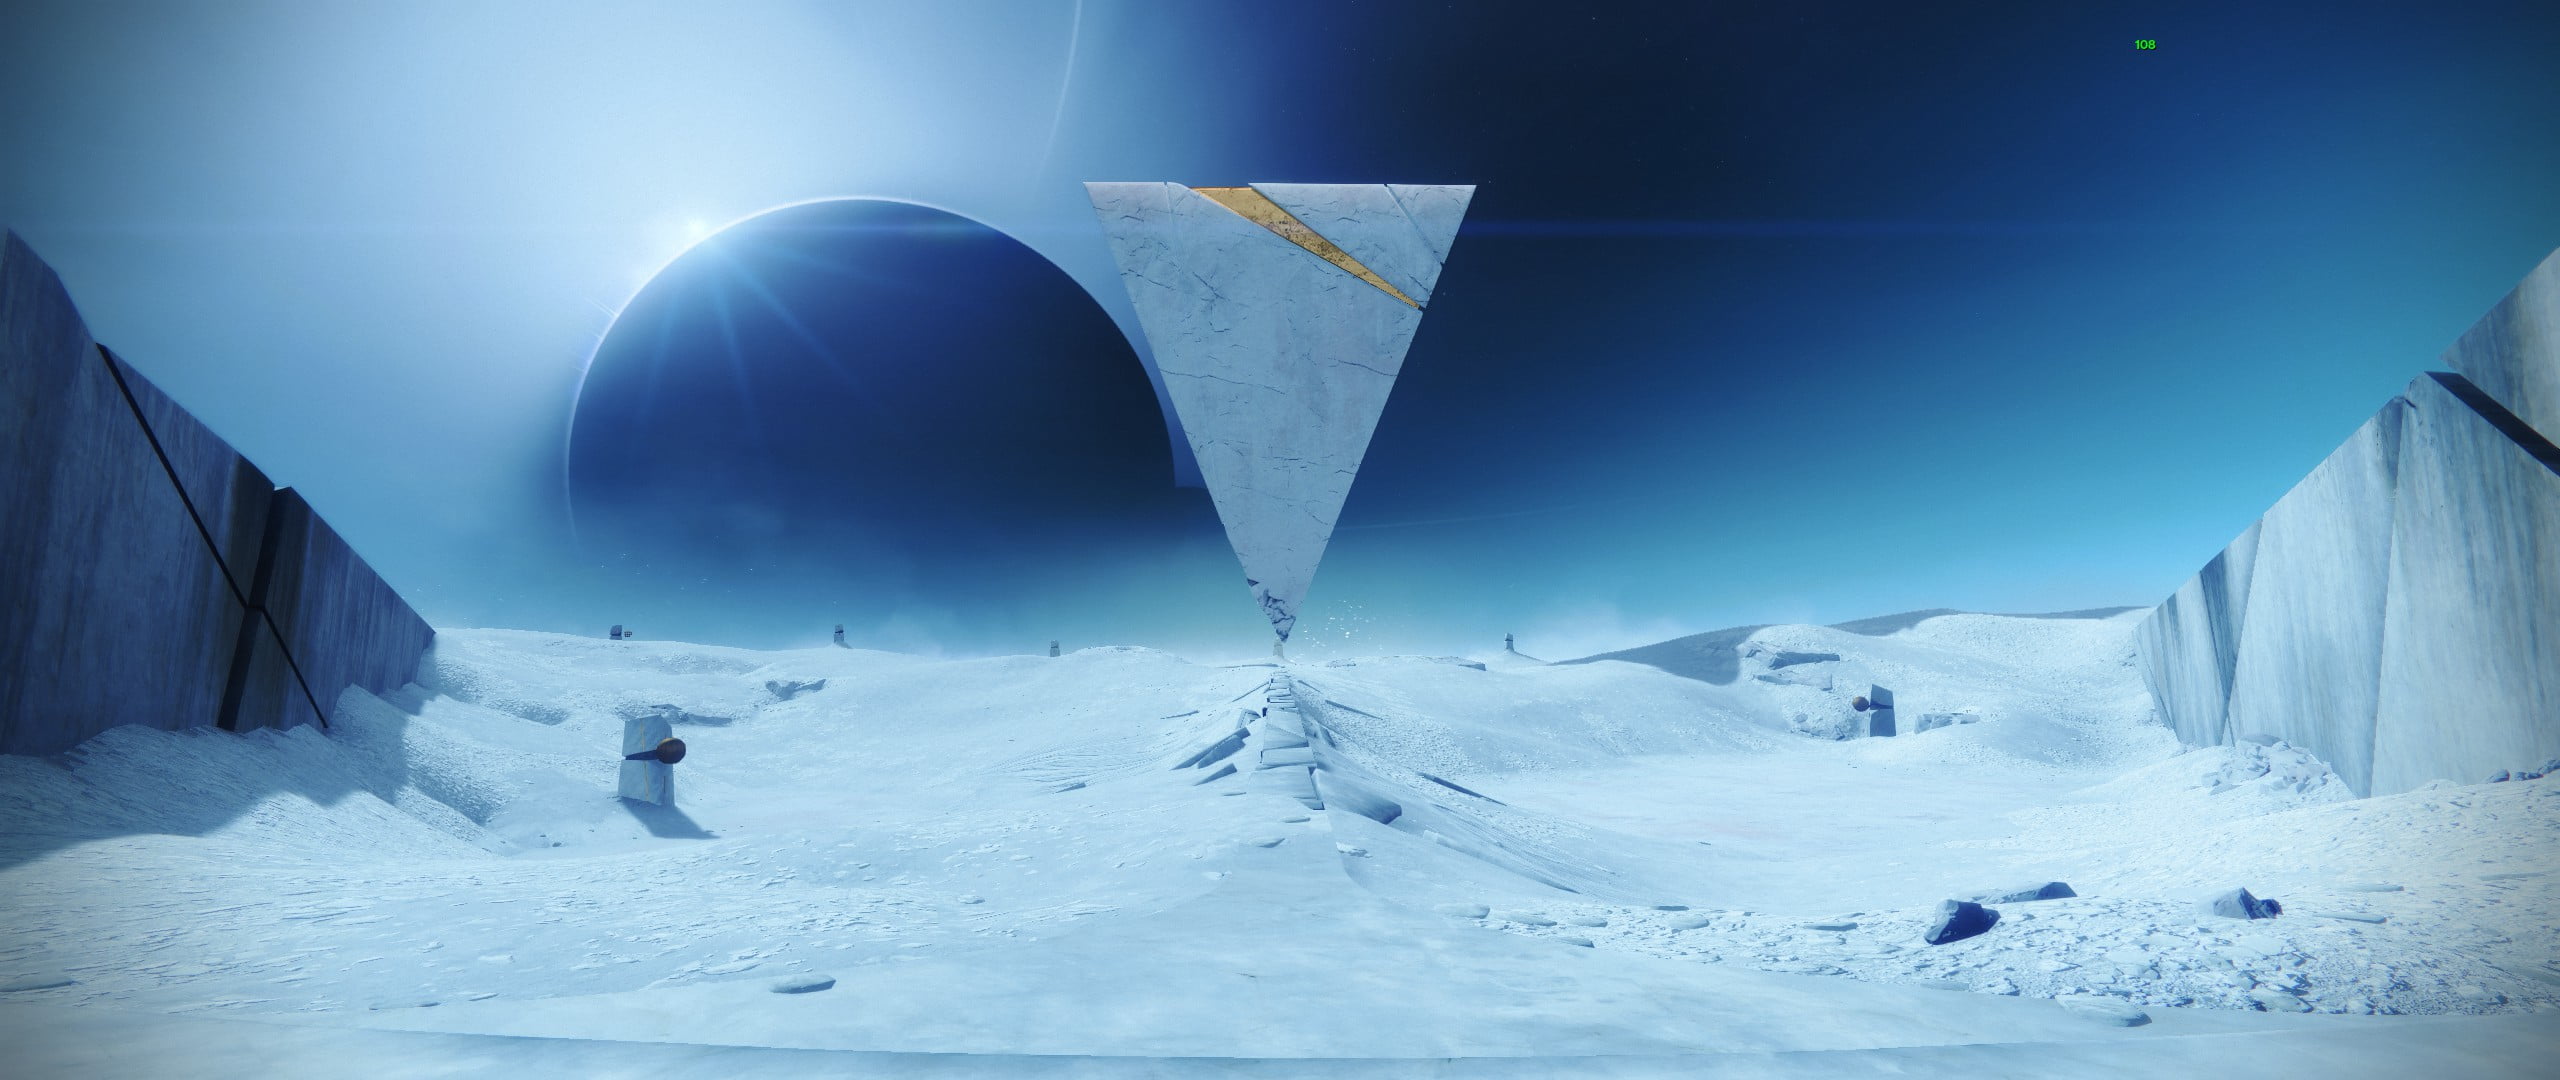 Destiny 2 (video game), minimalism, surreal